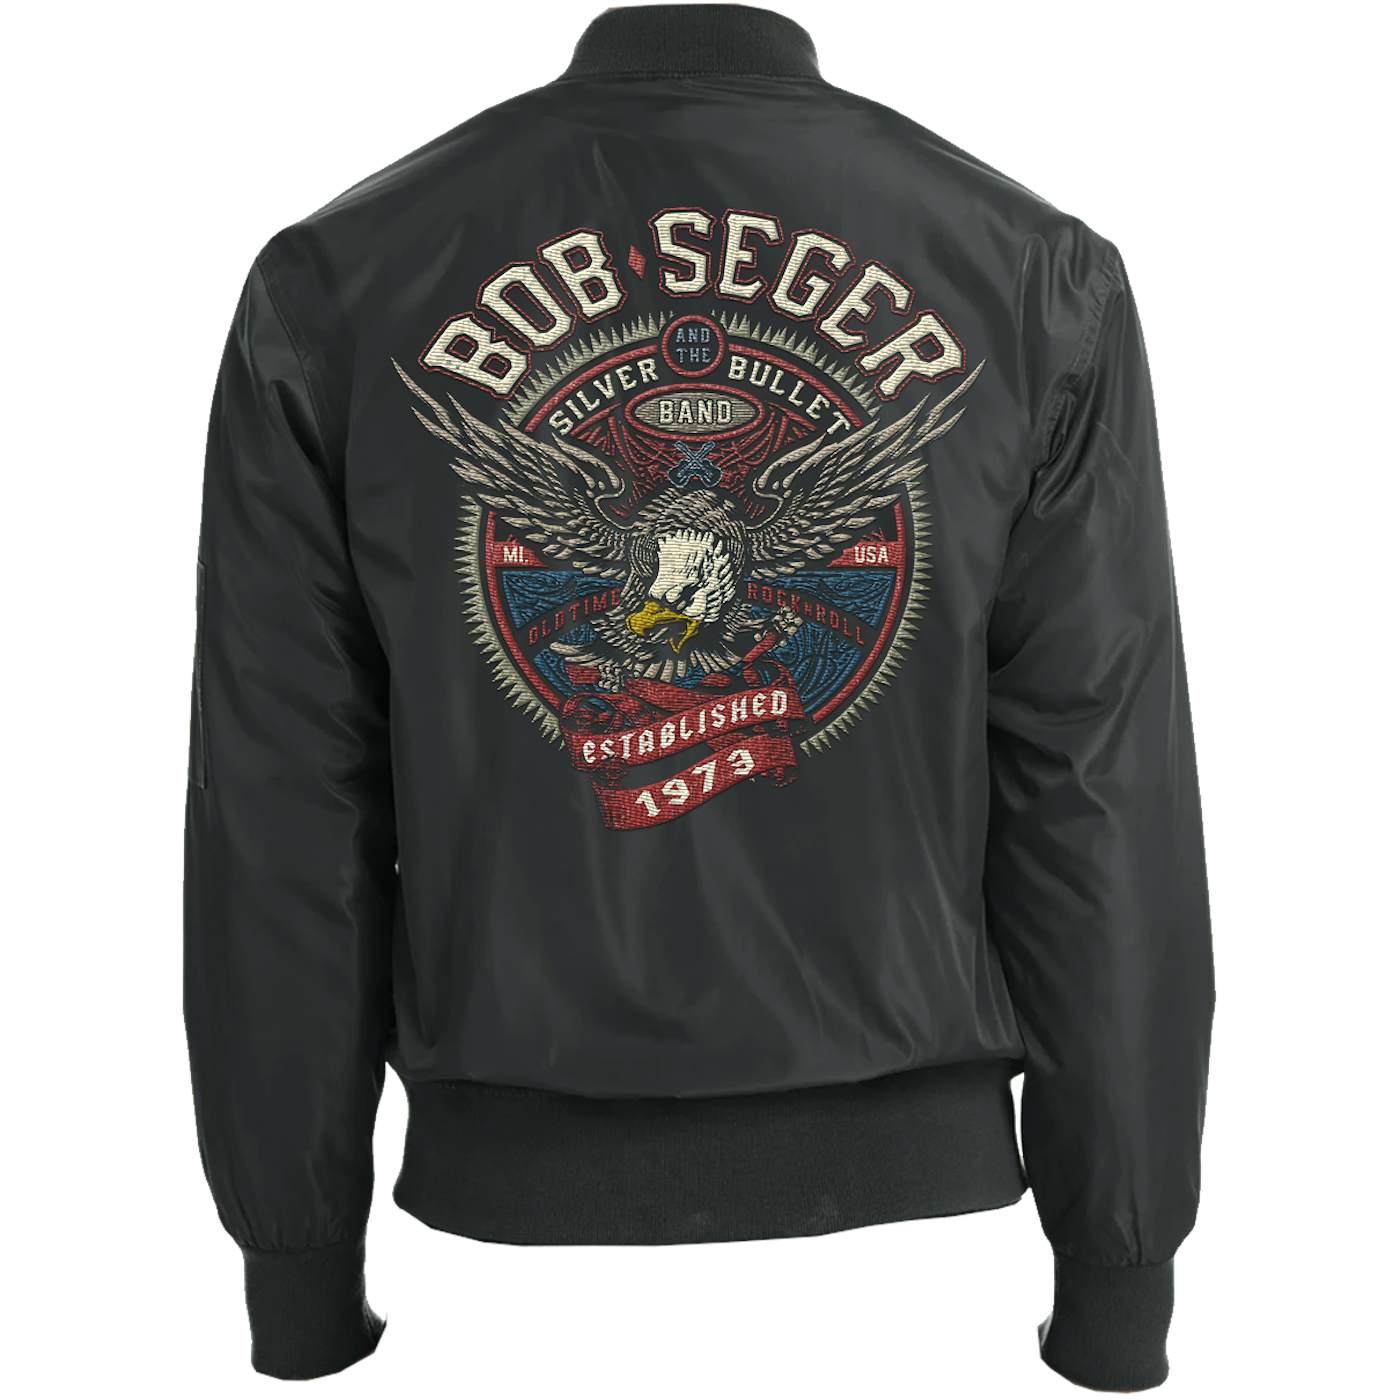 Bob Seger & The Silver Bullet Band Bomber Jacket